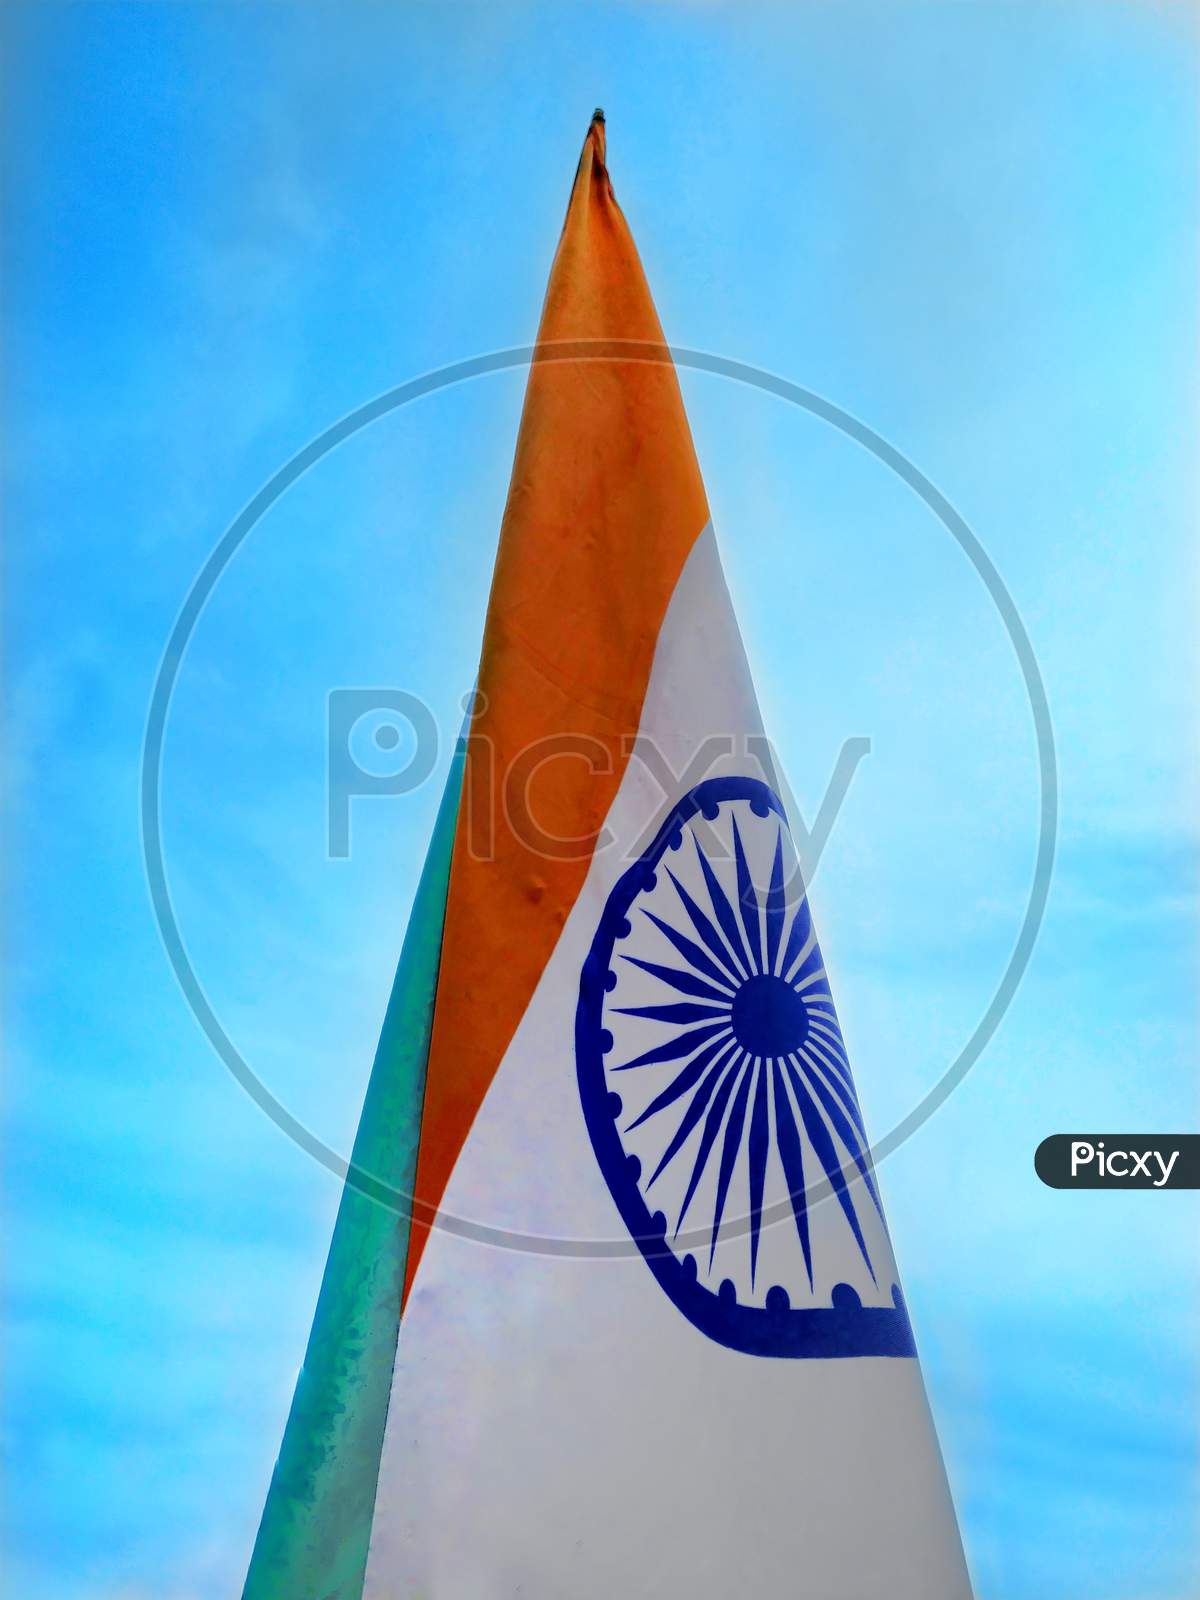 Indian flag waving.